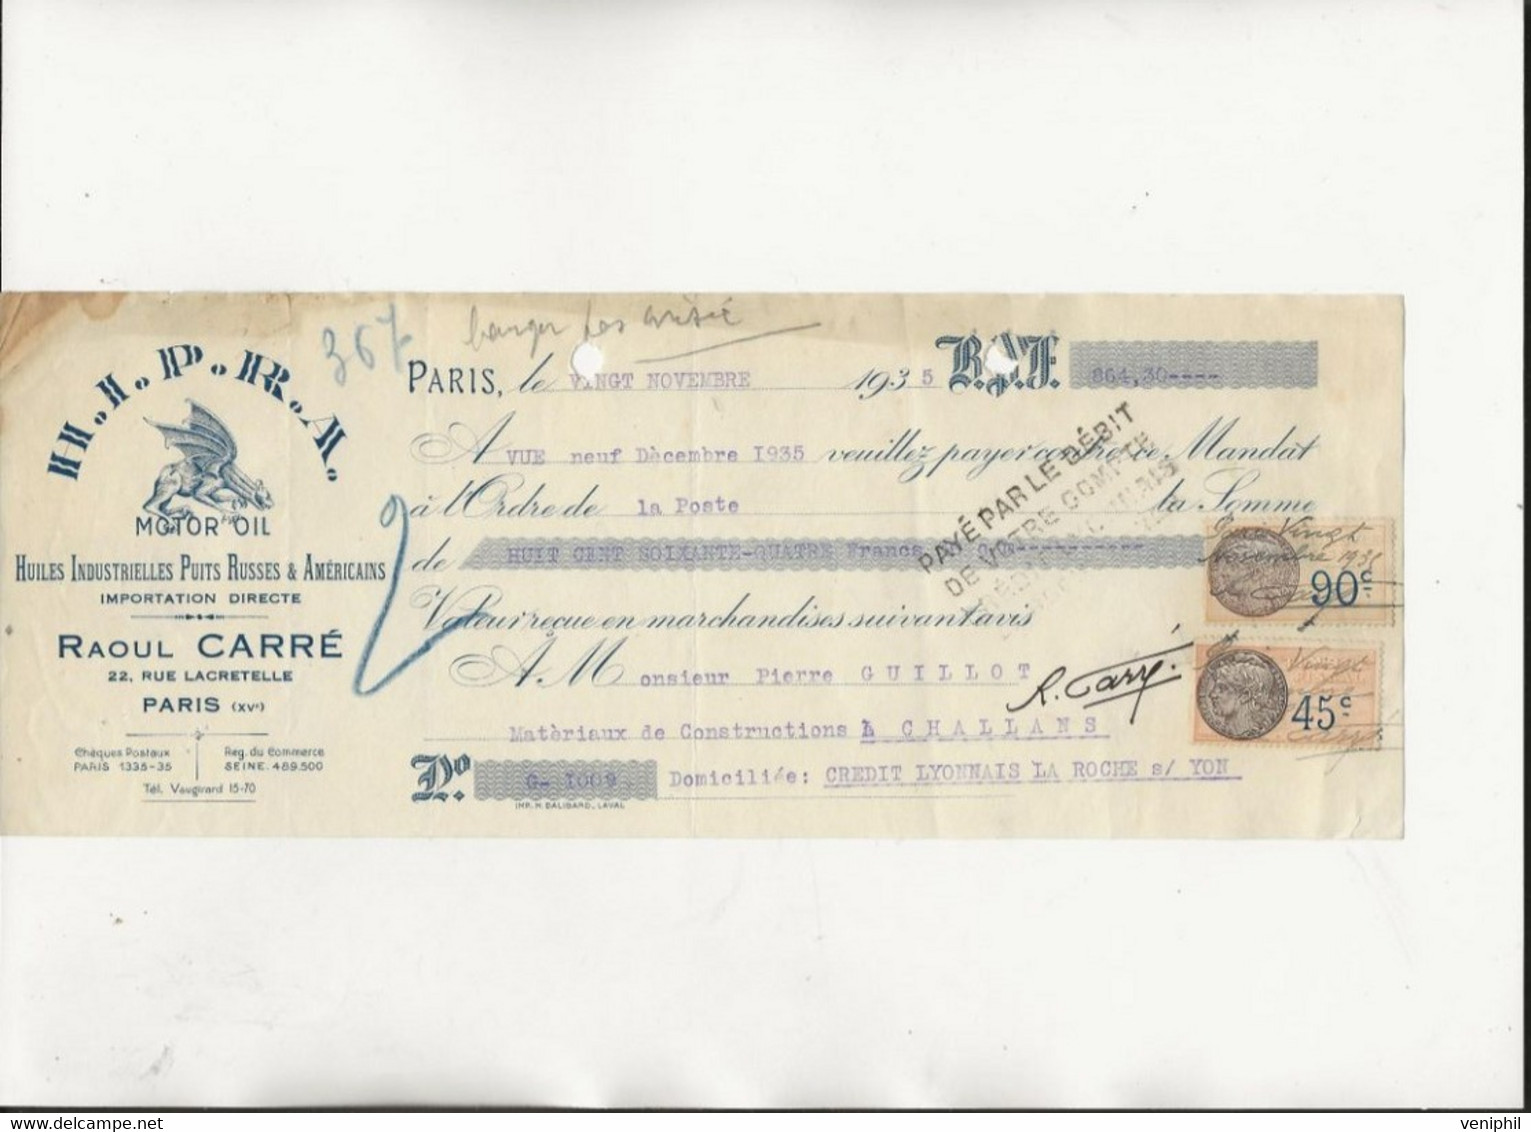 MOTOR OIL -HUILES IDUSTRIELLES PUITS RUSSES ET AMERICAINS -PARIS XV -ANNEE 1935 - Bills Of Exchange